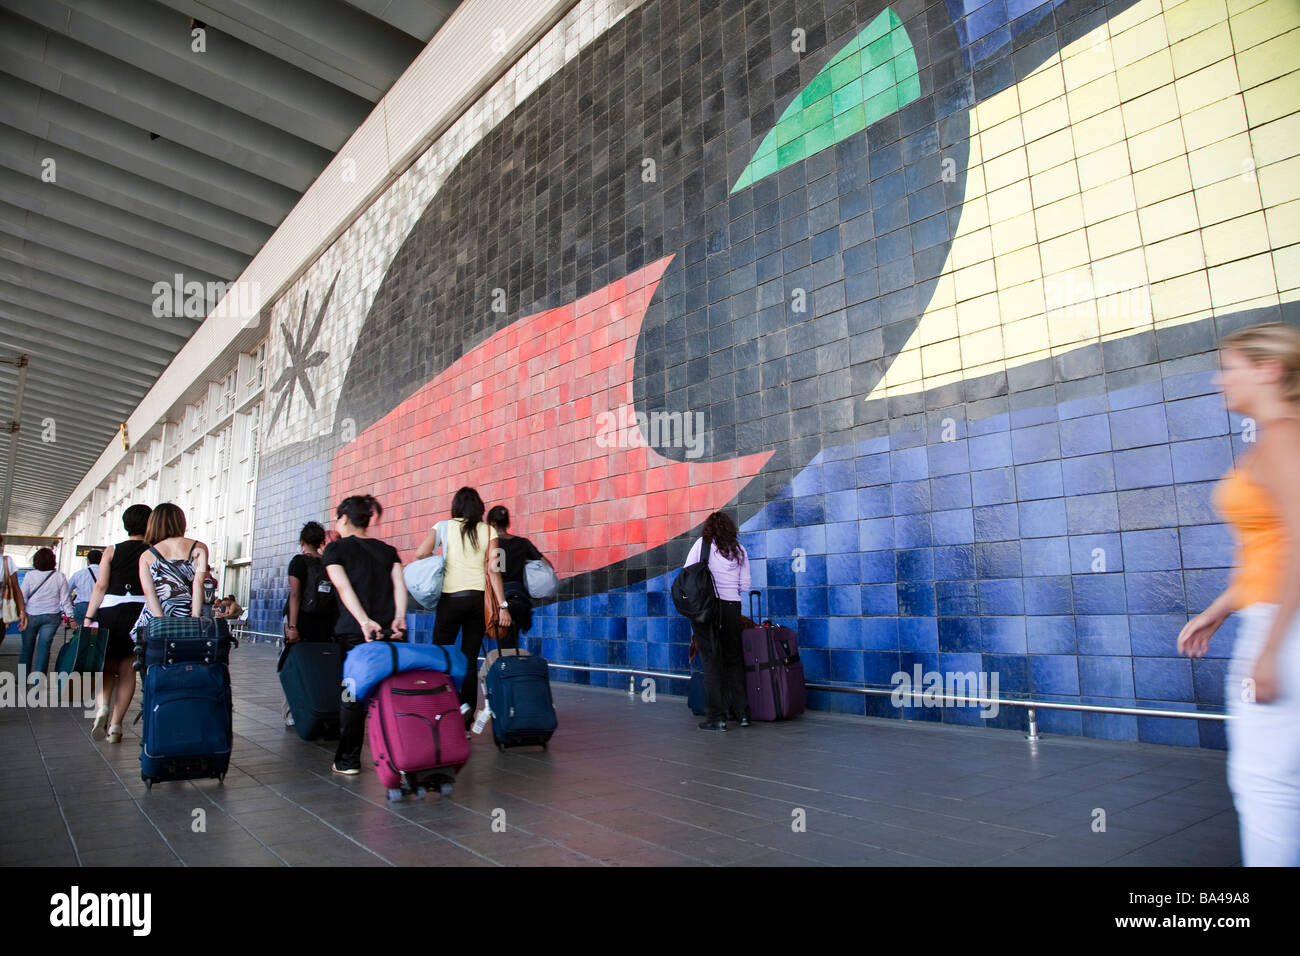 Joan Miro s mural El Prat de Llobregat airport Barcelona Spain Stock Photo